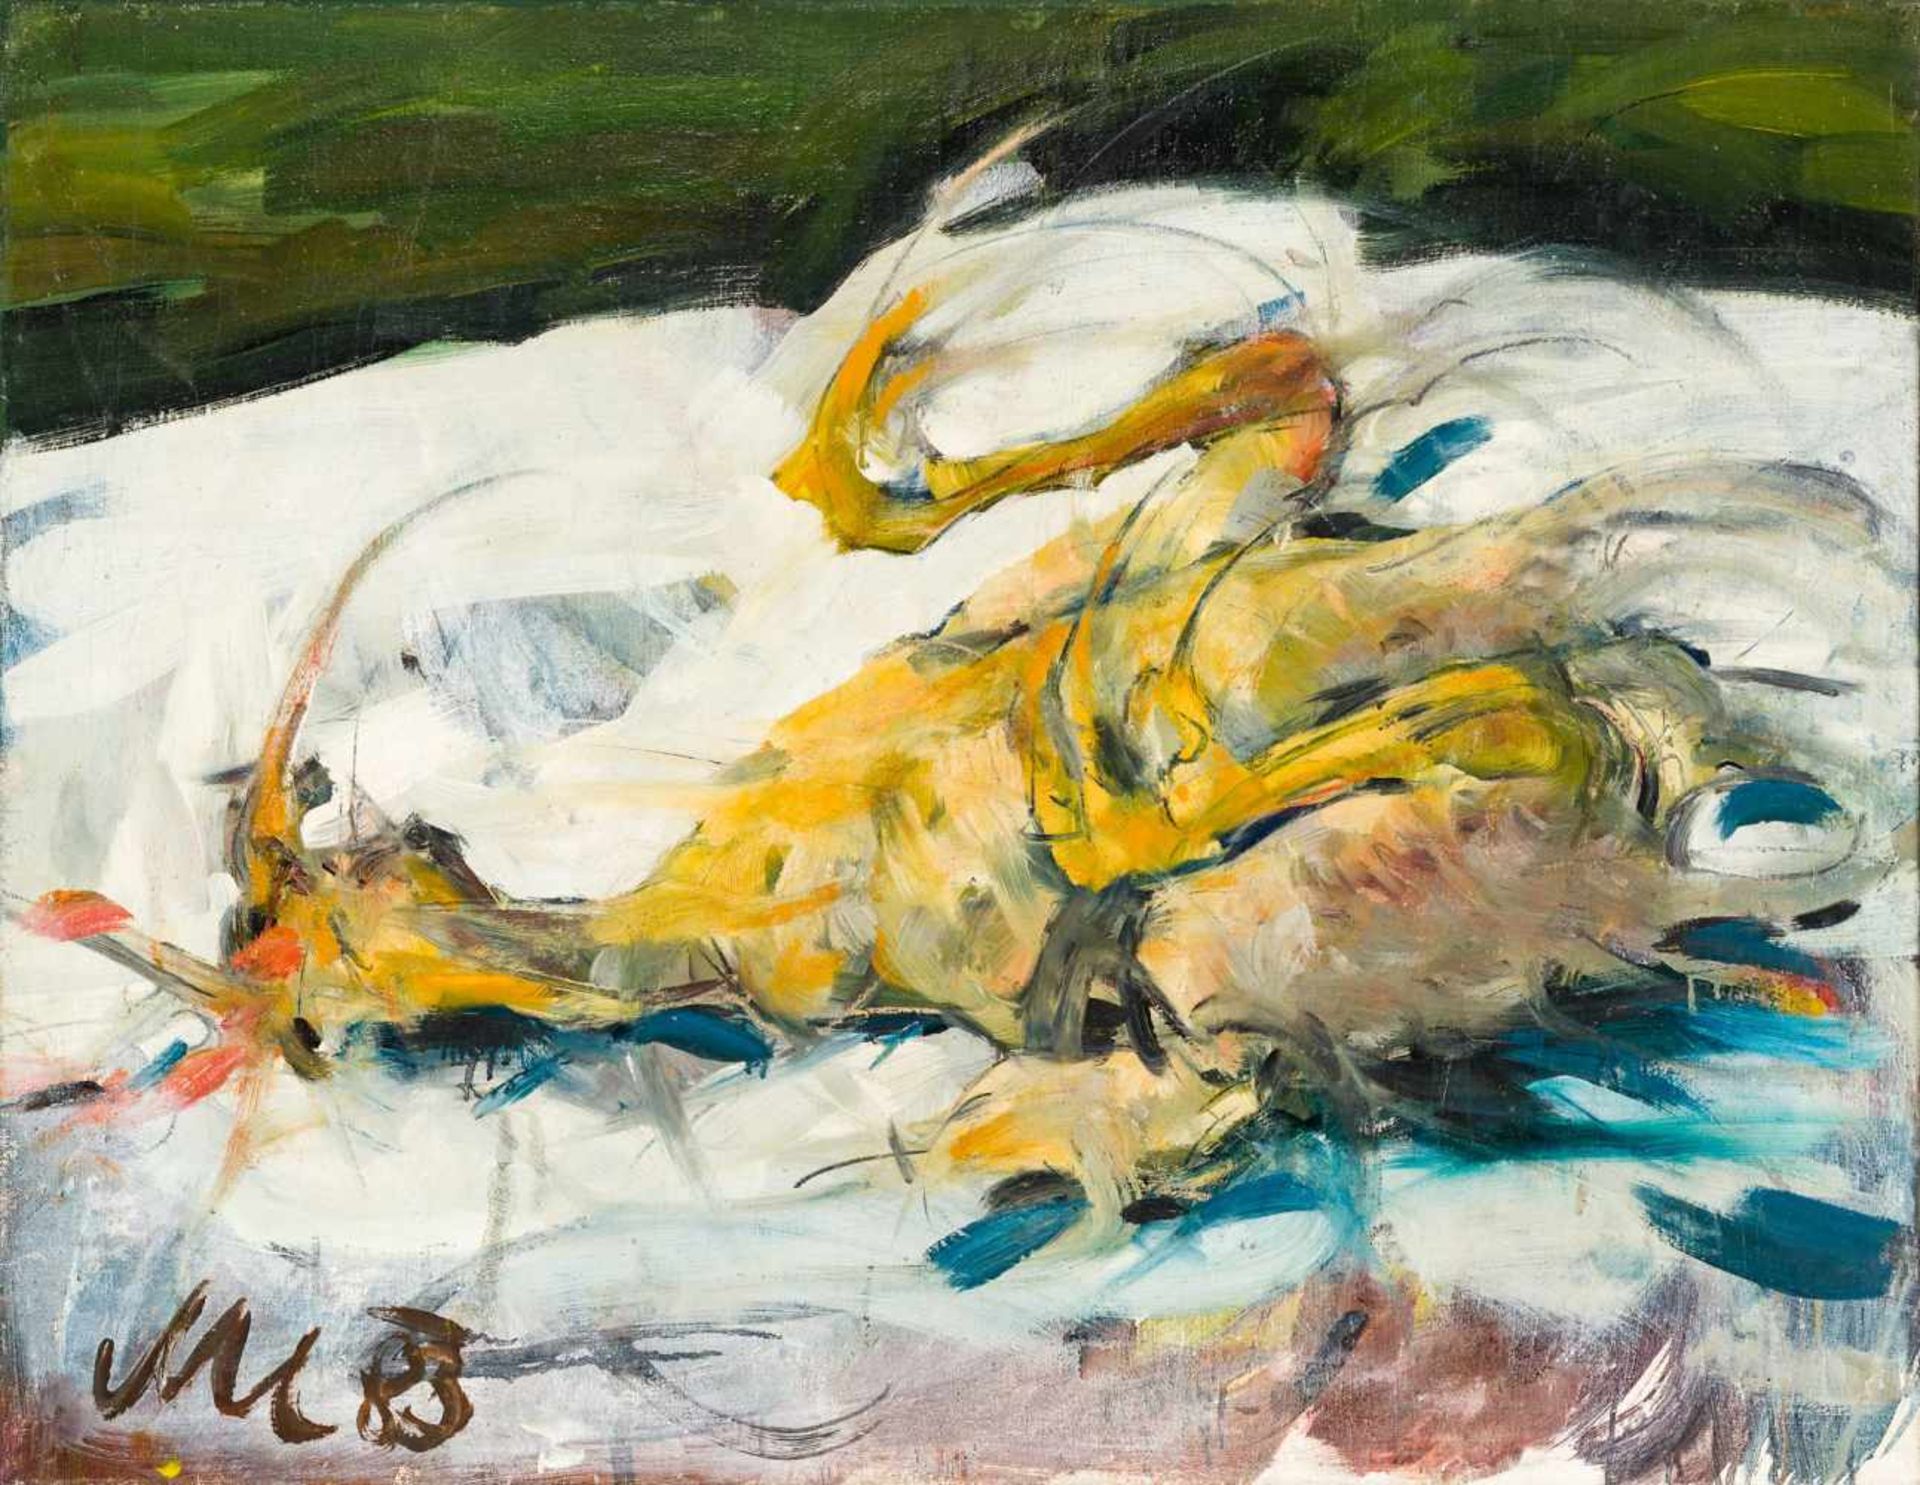 Markus MunteanGraz 1962 *Stilleben mit totem HuhnÖl auf Leinwand / oil on canvas85 x 109,5